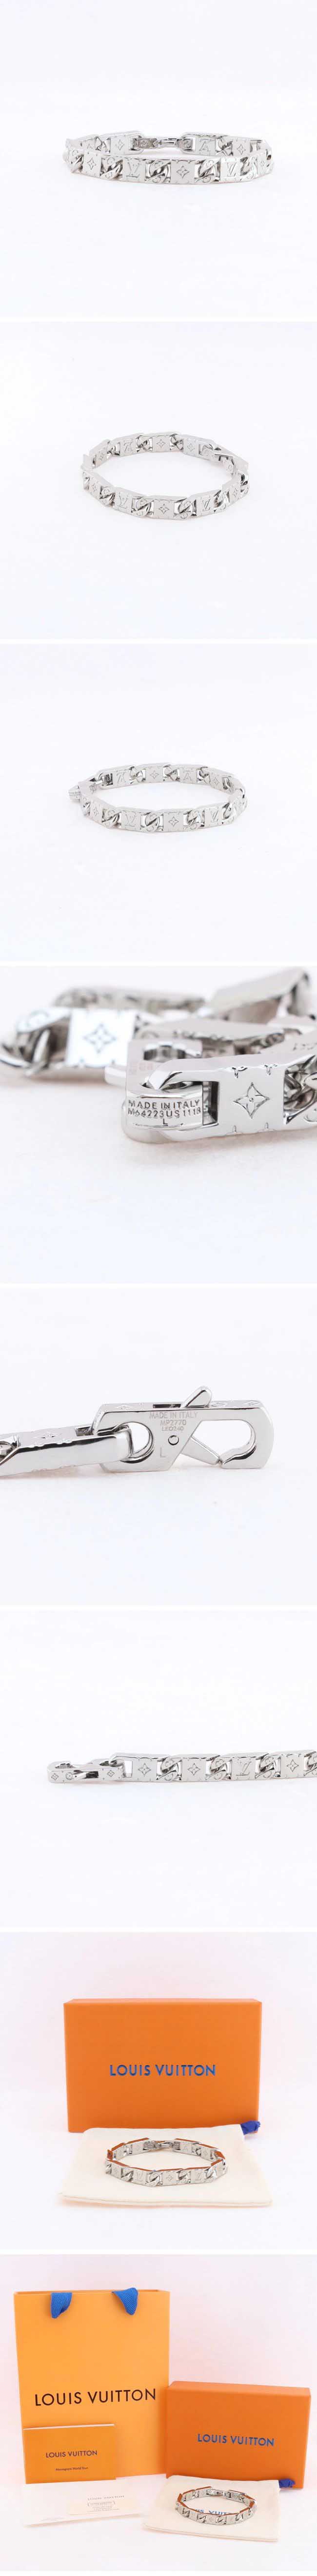 Louis Vuitton Monogram Chain Bracelet ルイヴィトン モノグラム チェーン ブレスレット